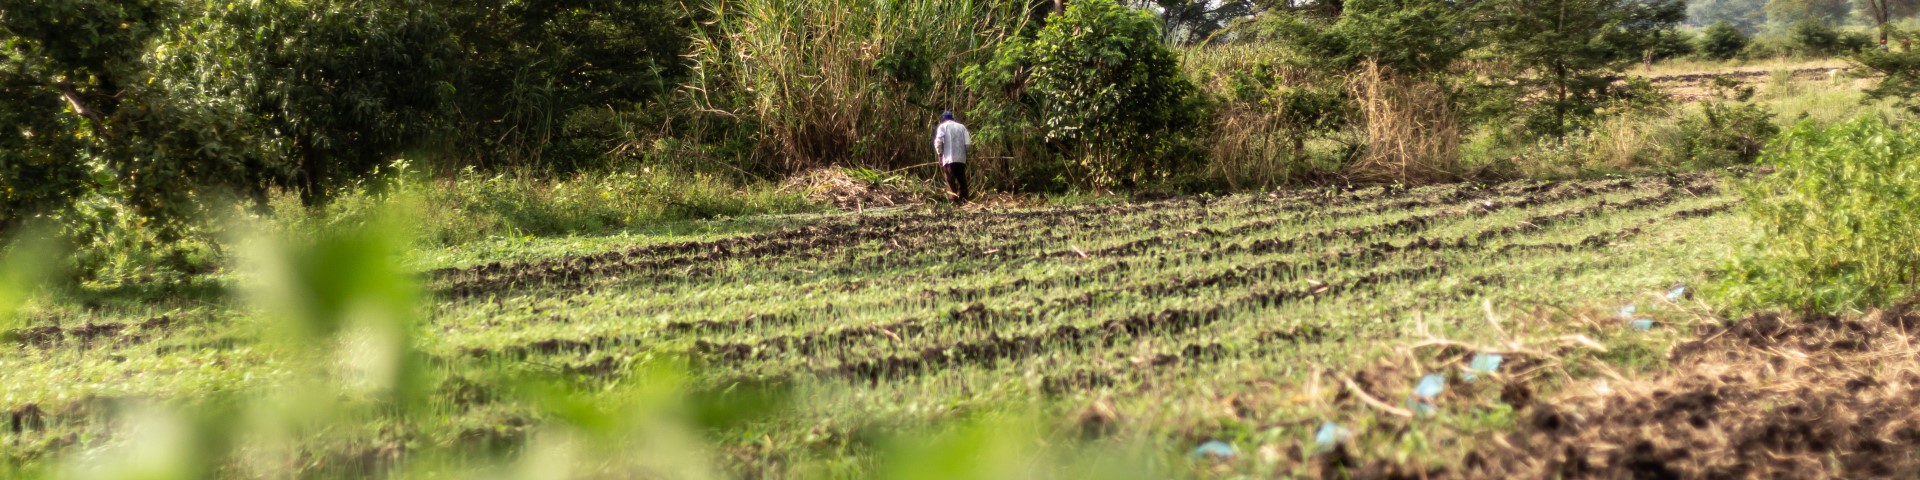 A person tills a wheat field in Ethiopia.  © Claudia Jordan/GIZ